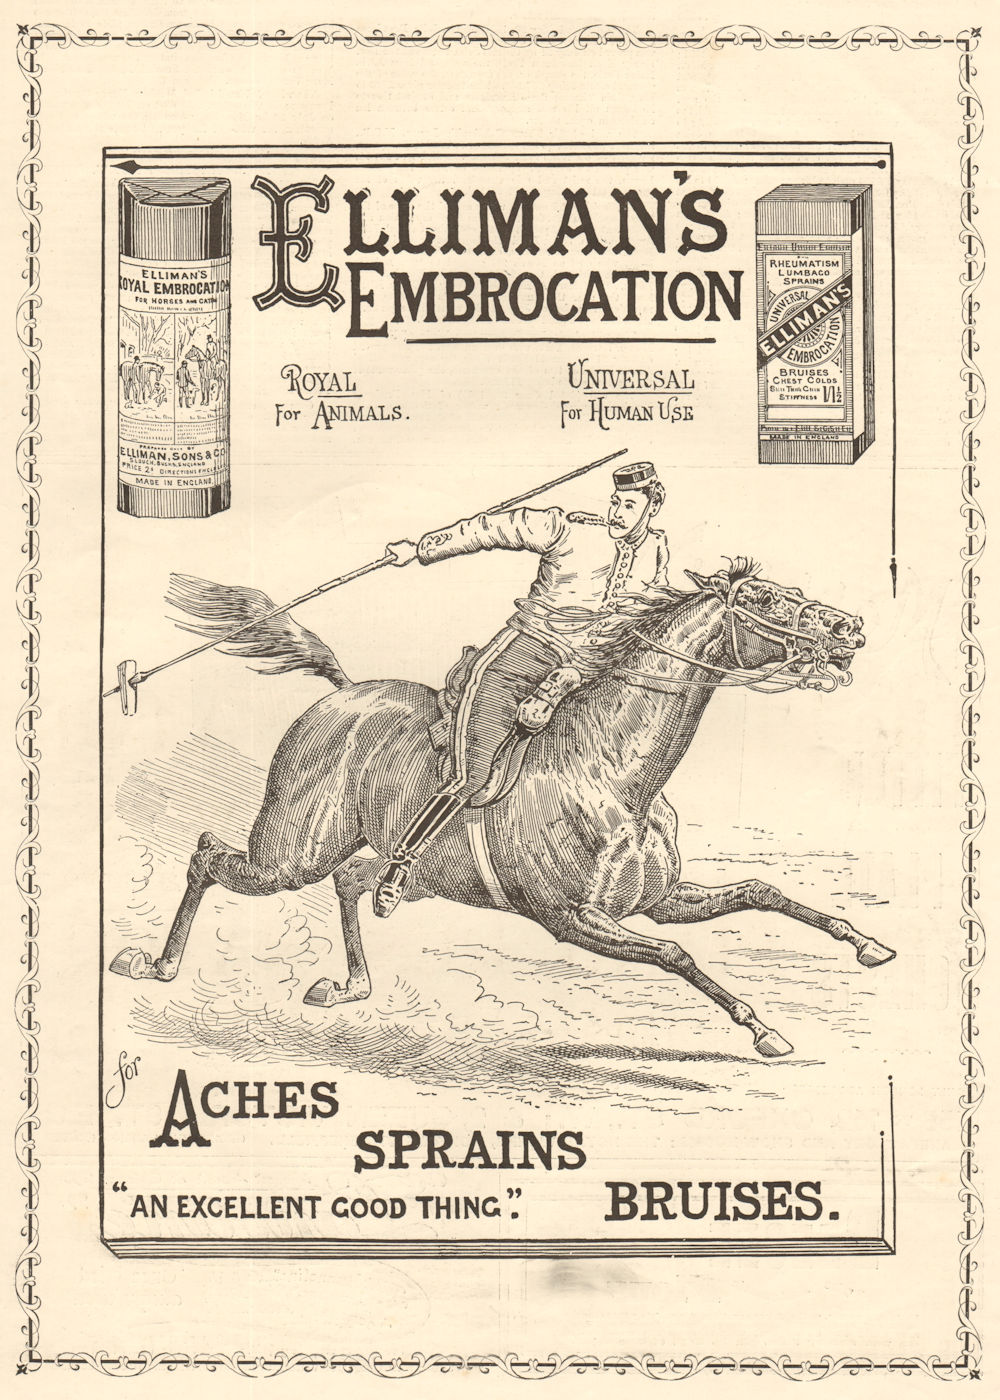 Associate Product Elliman's embrocation. ADVERT. Militaria 1896 old antique print picture